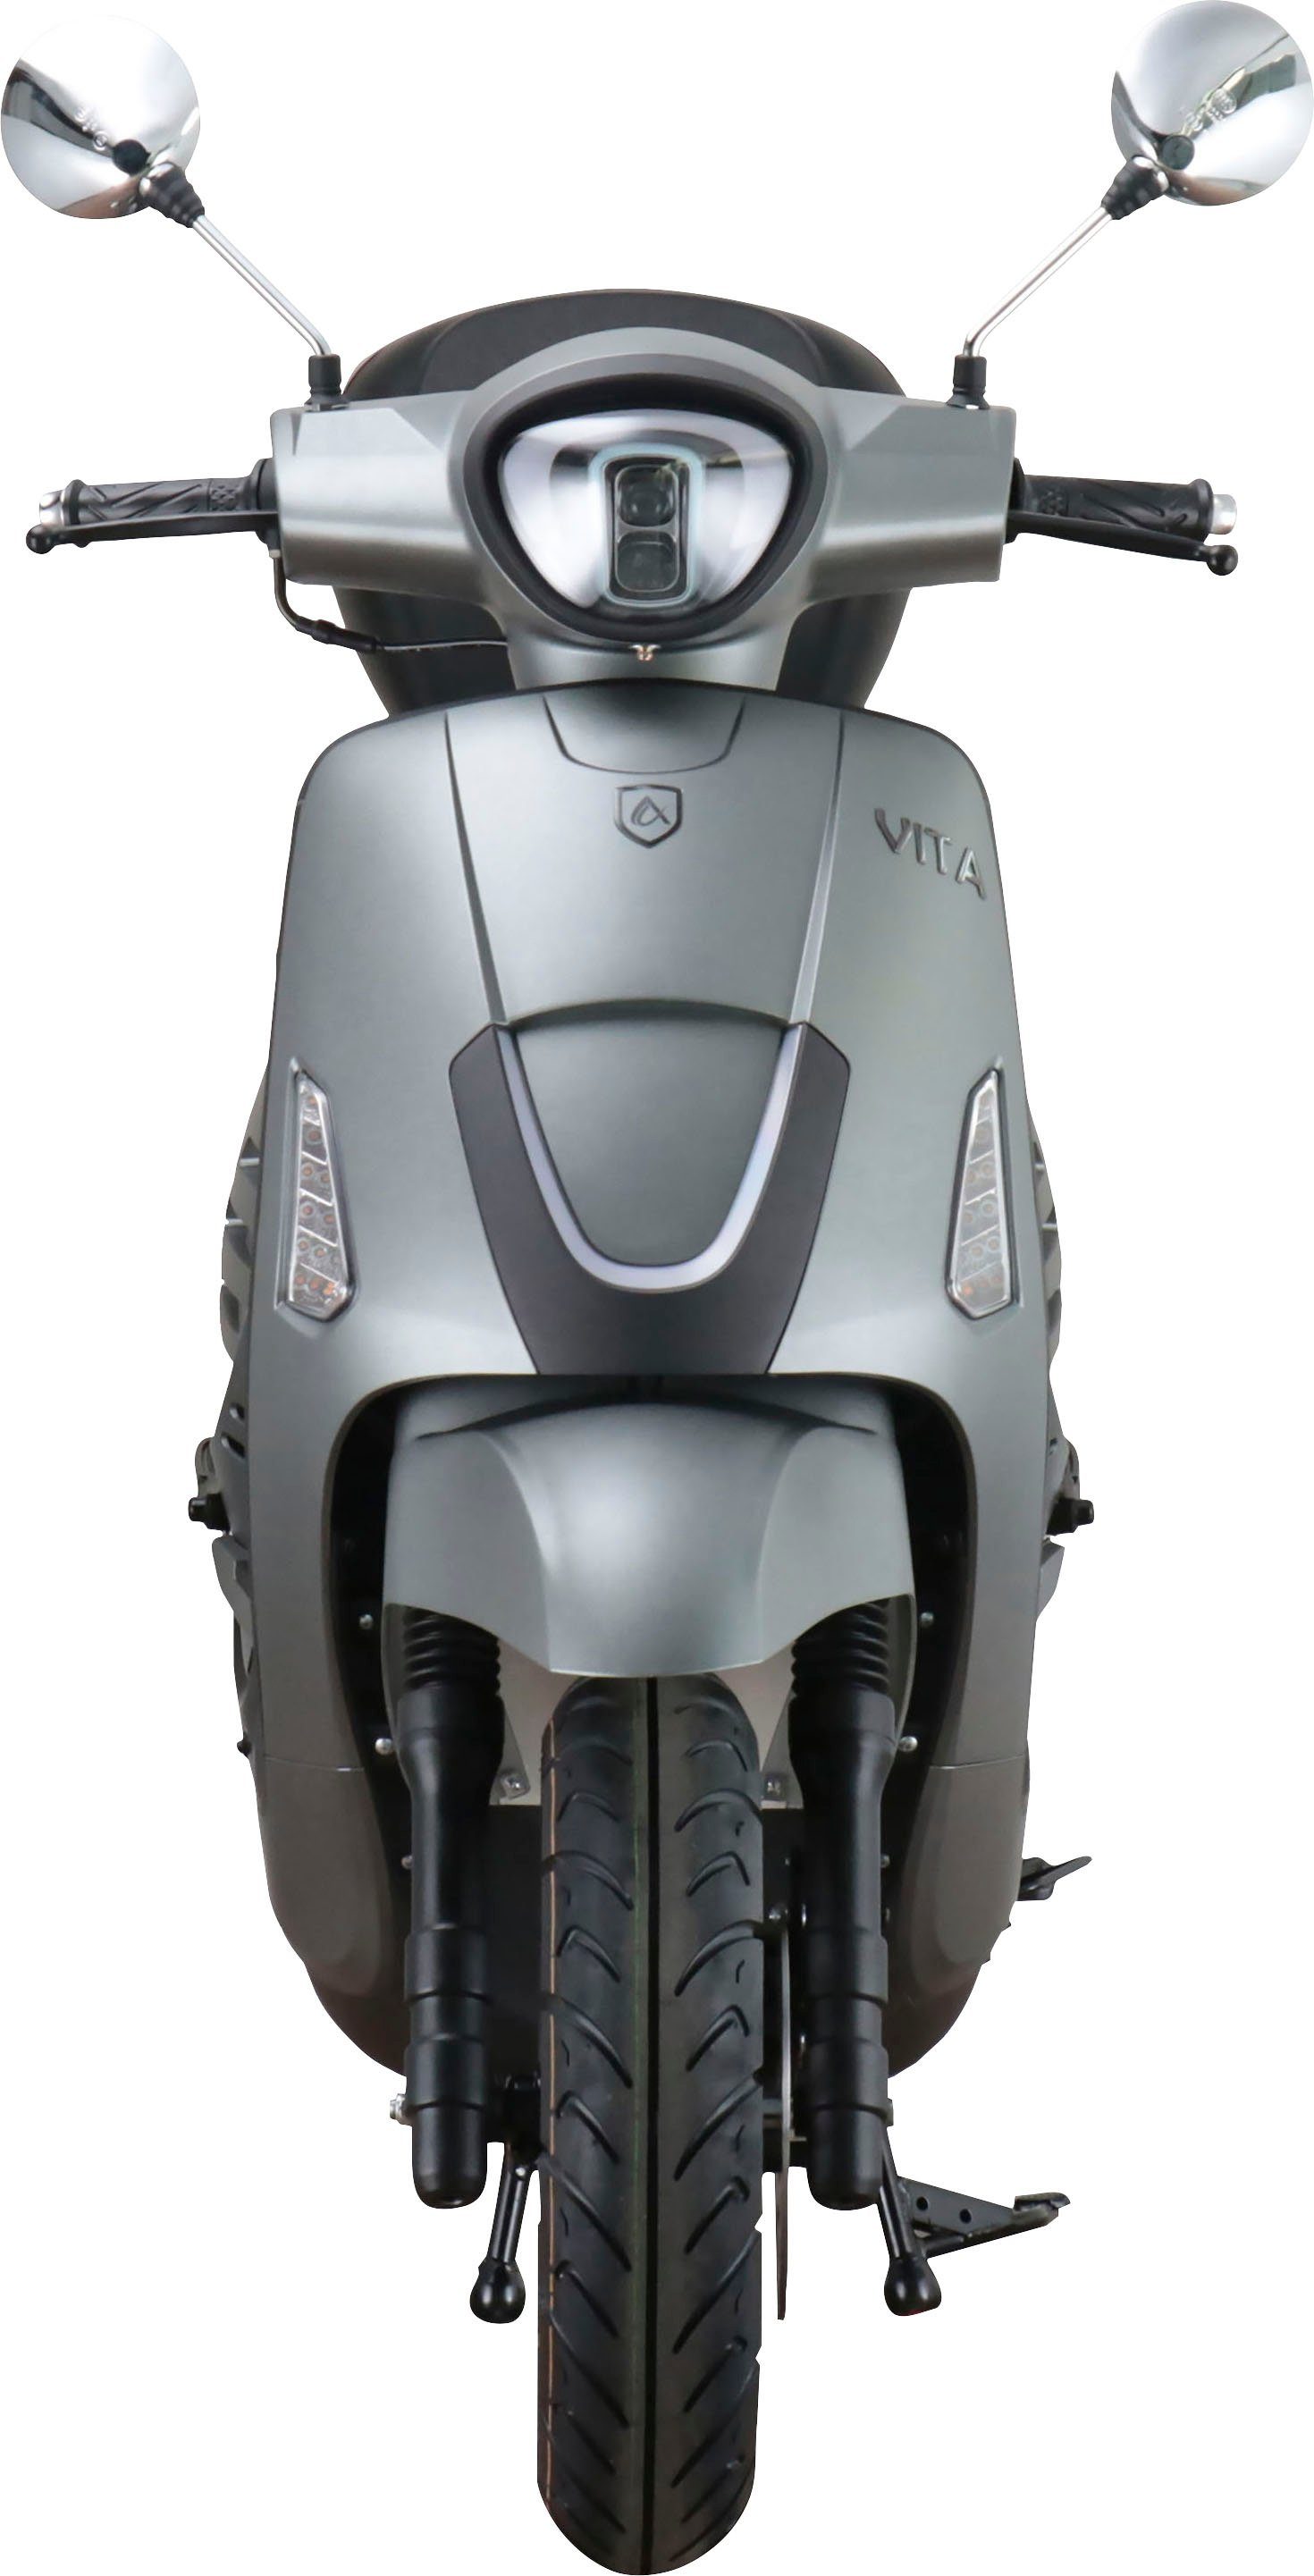 Alpha Motors Motorroller inkl. 50 Vita, 45 km/h, Euro Topcase 5, ccm